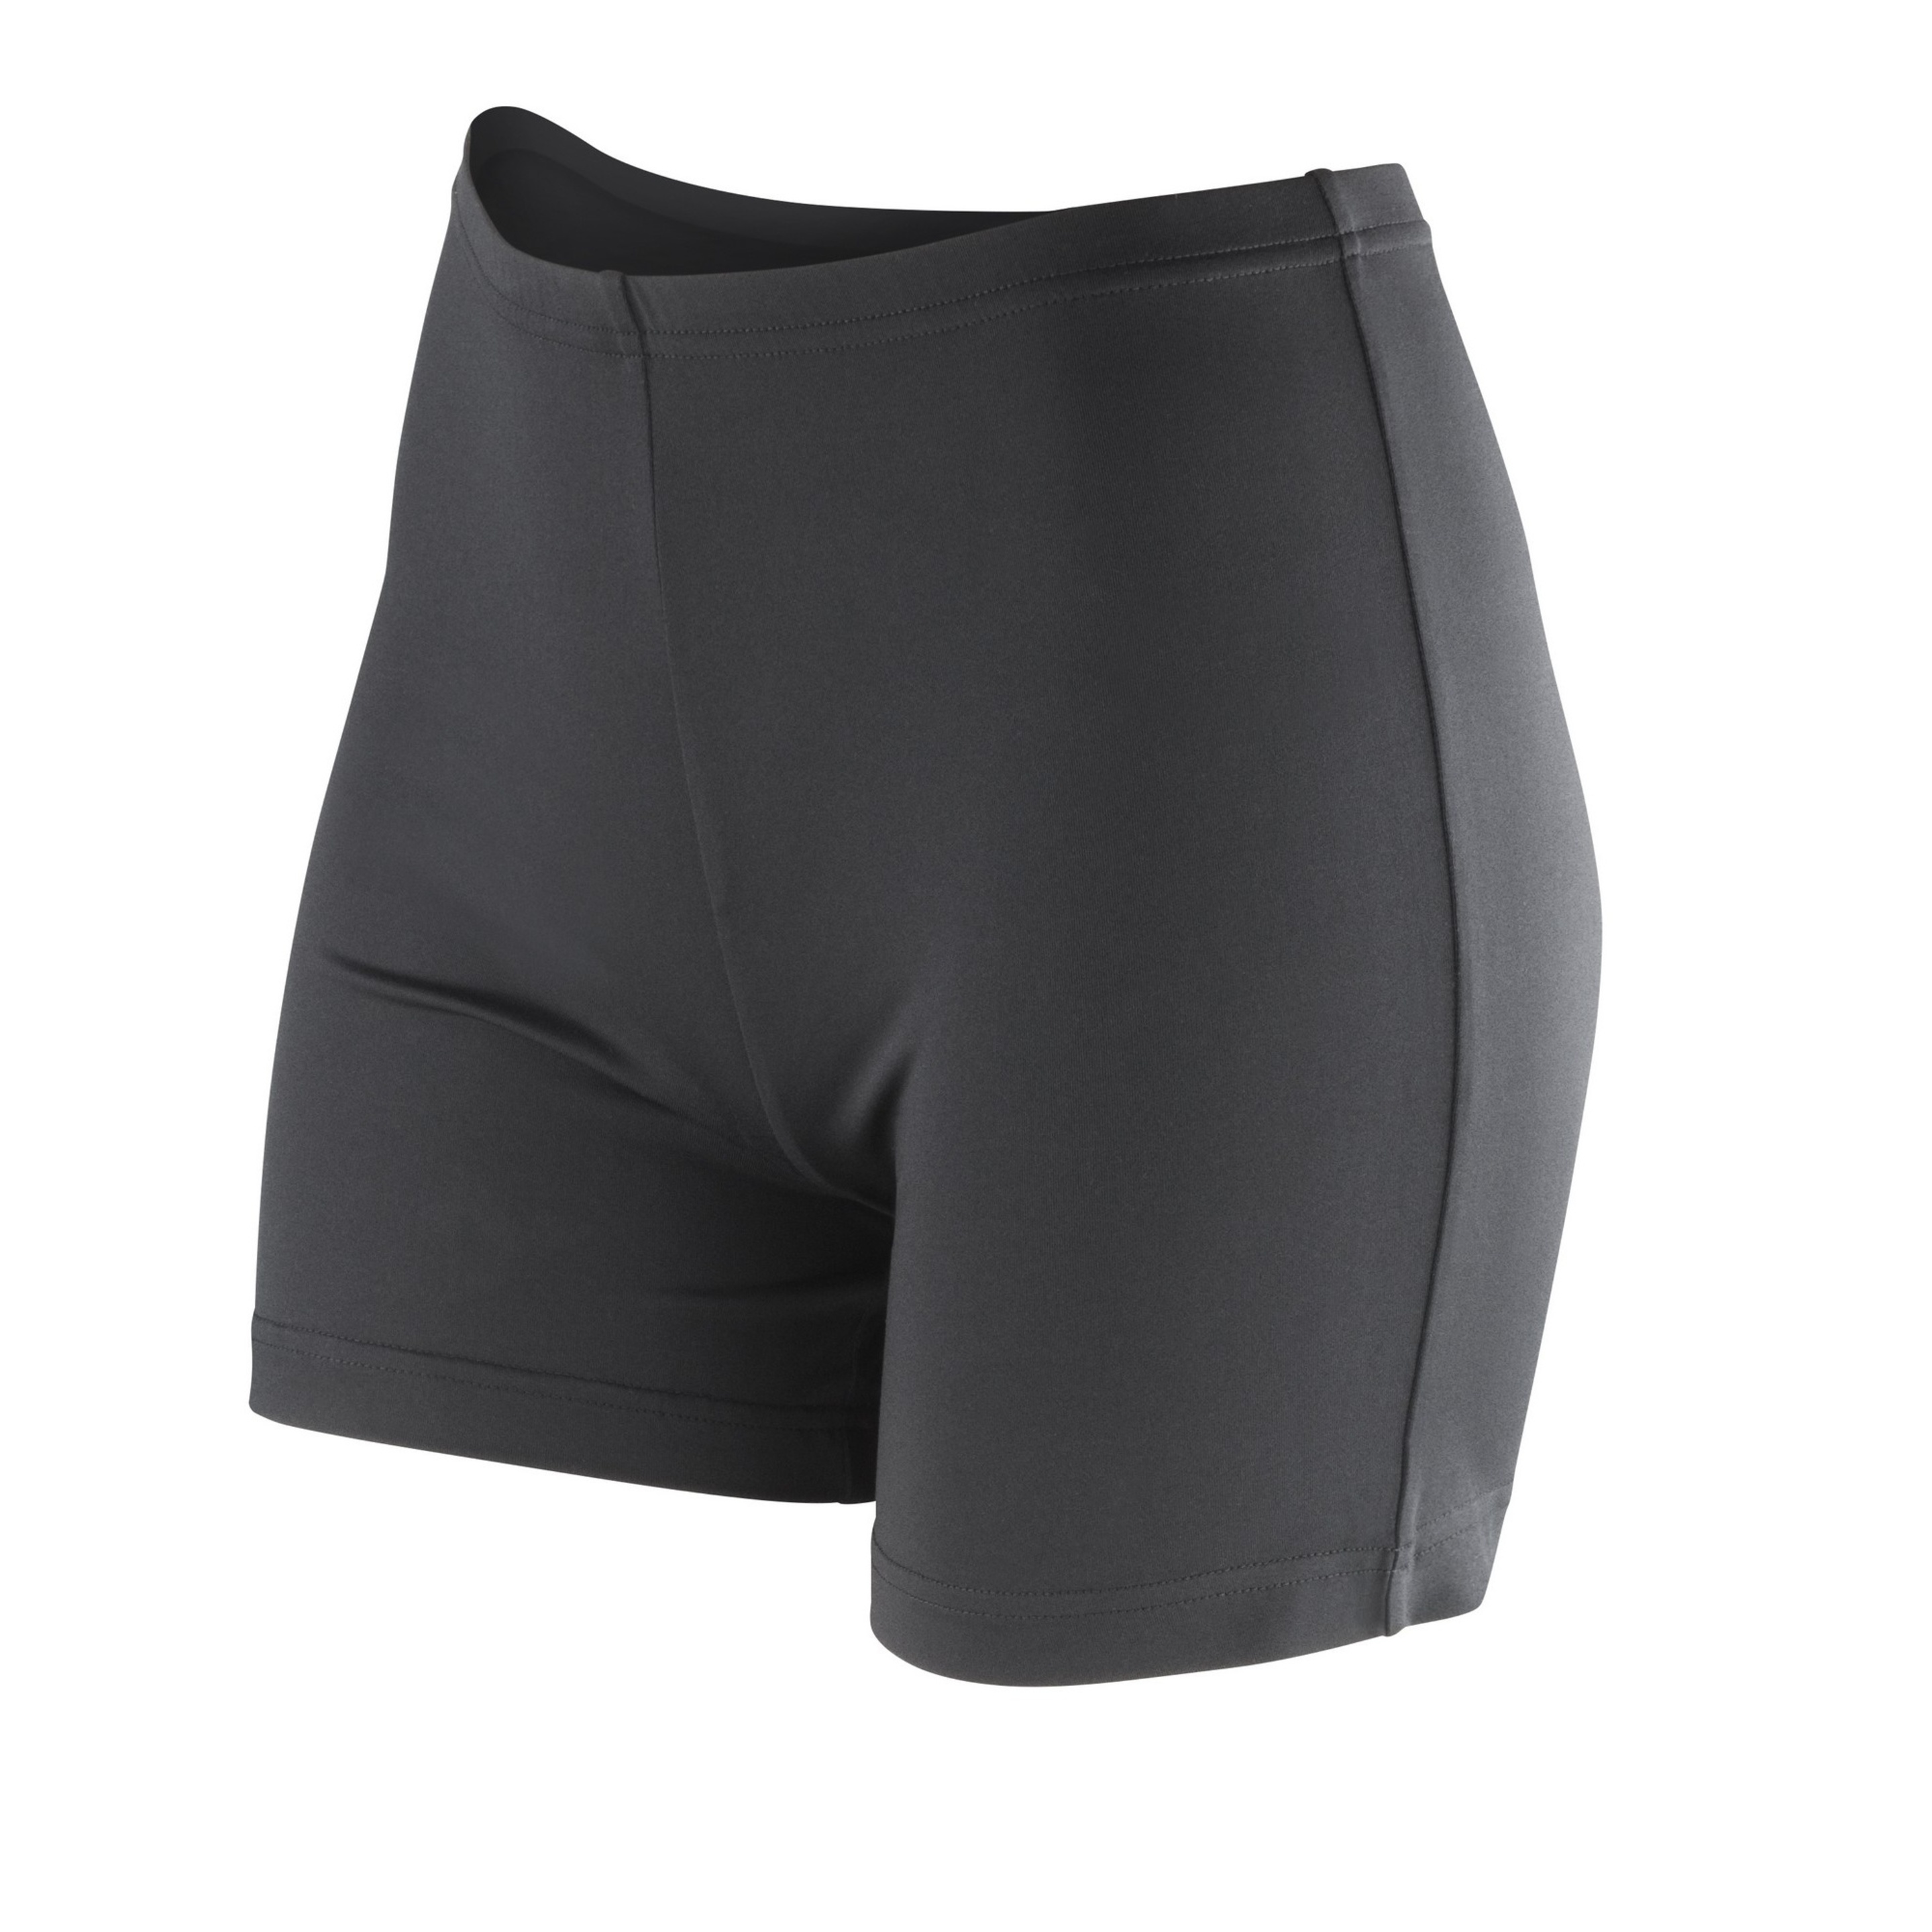 Pantalones Cortos Elásticos Modelo Softex Spiro - negro - 